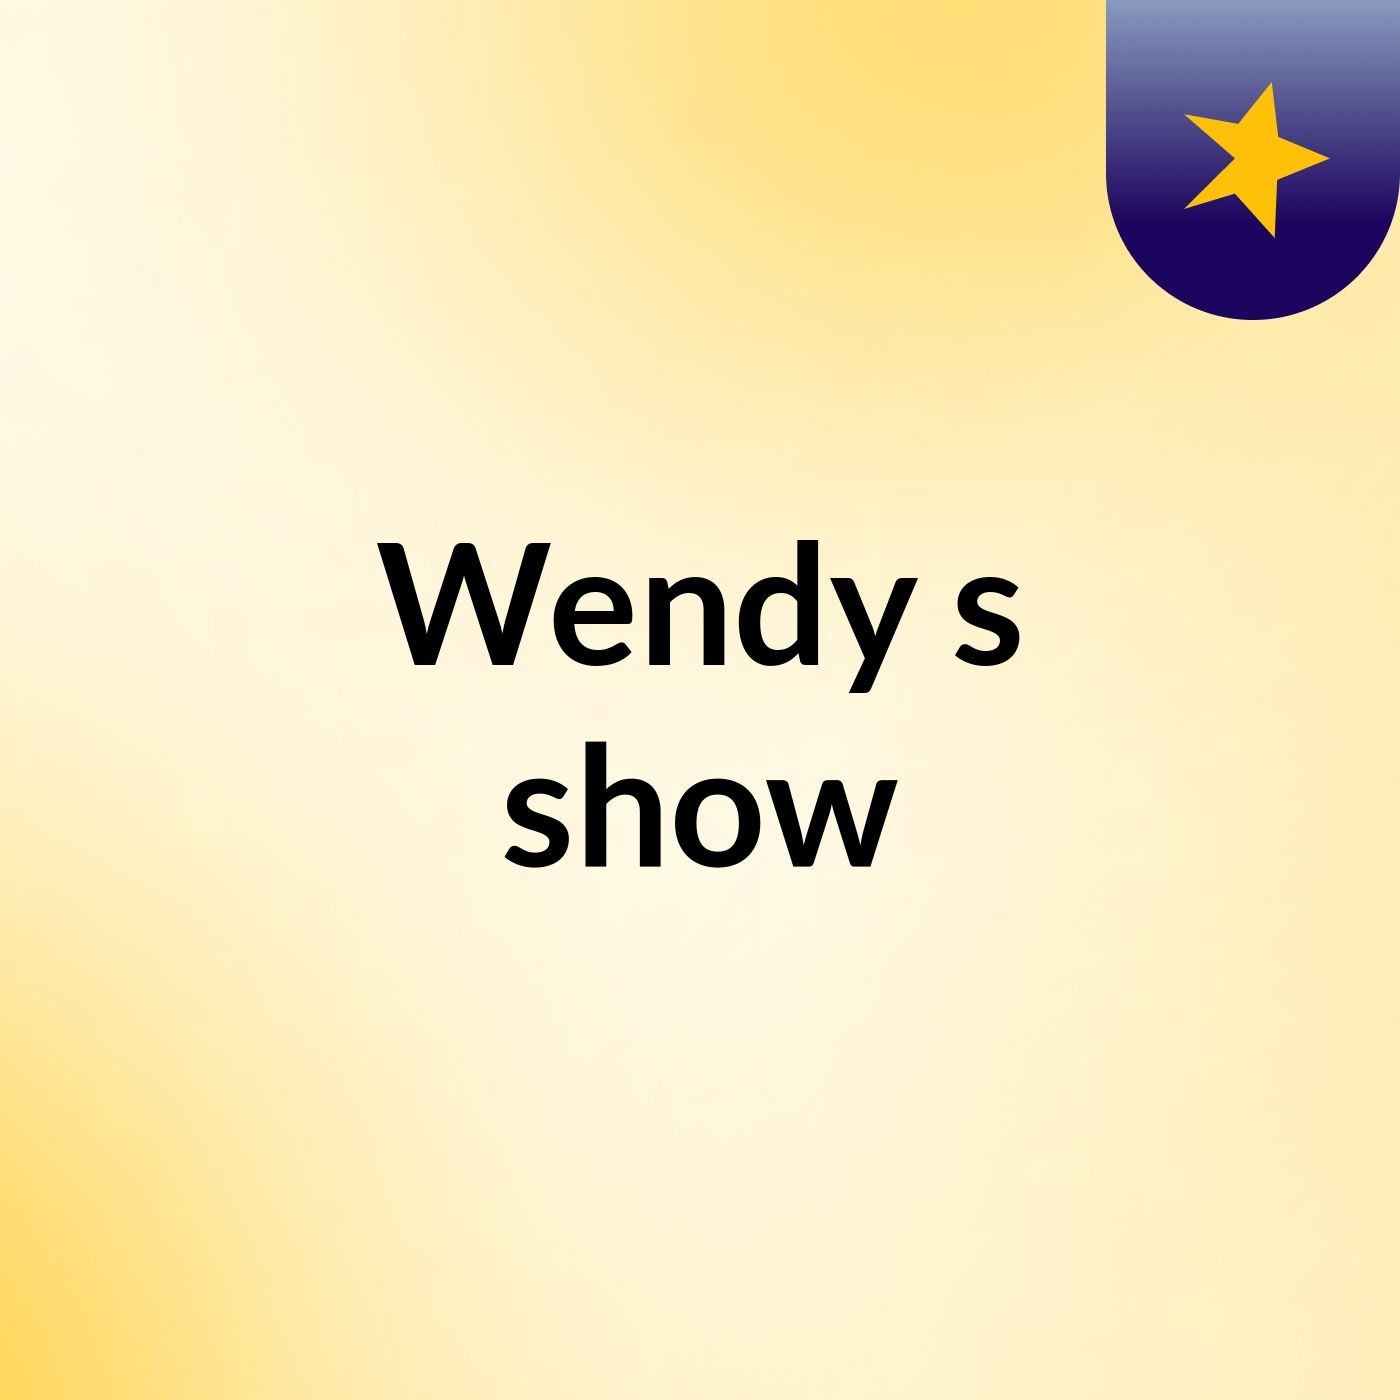 Wendy's show